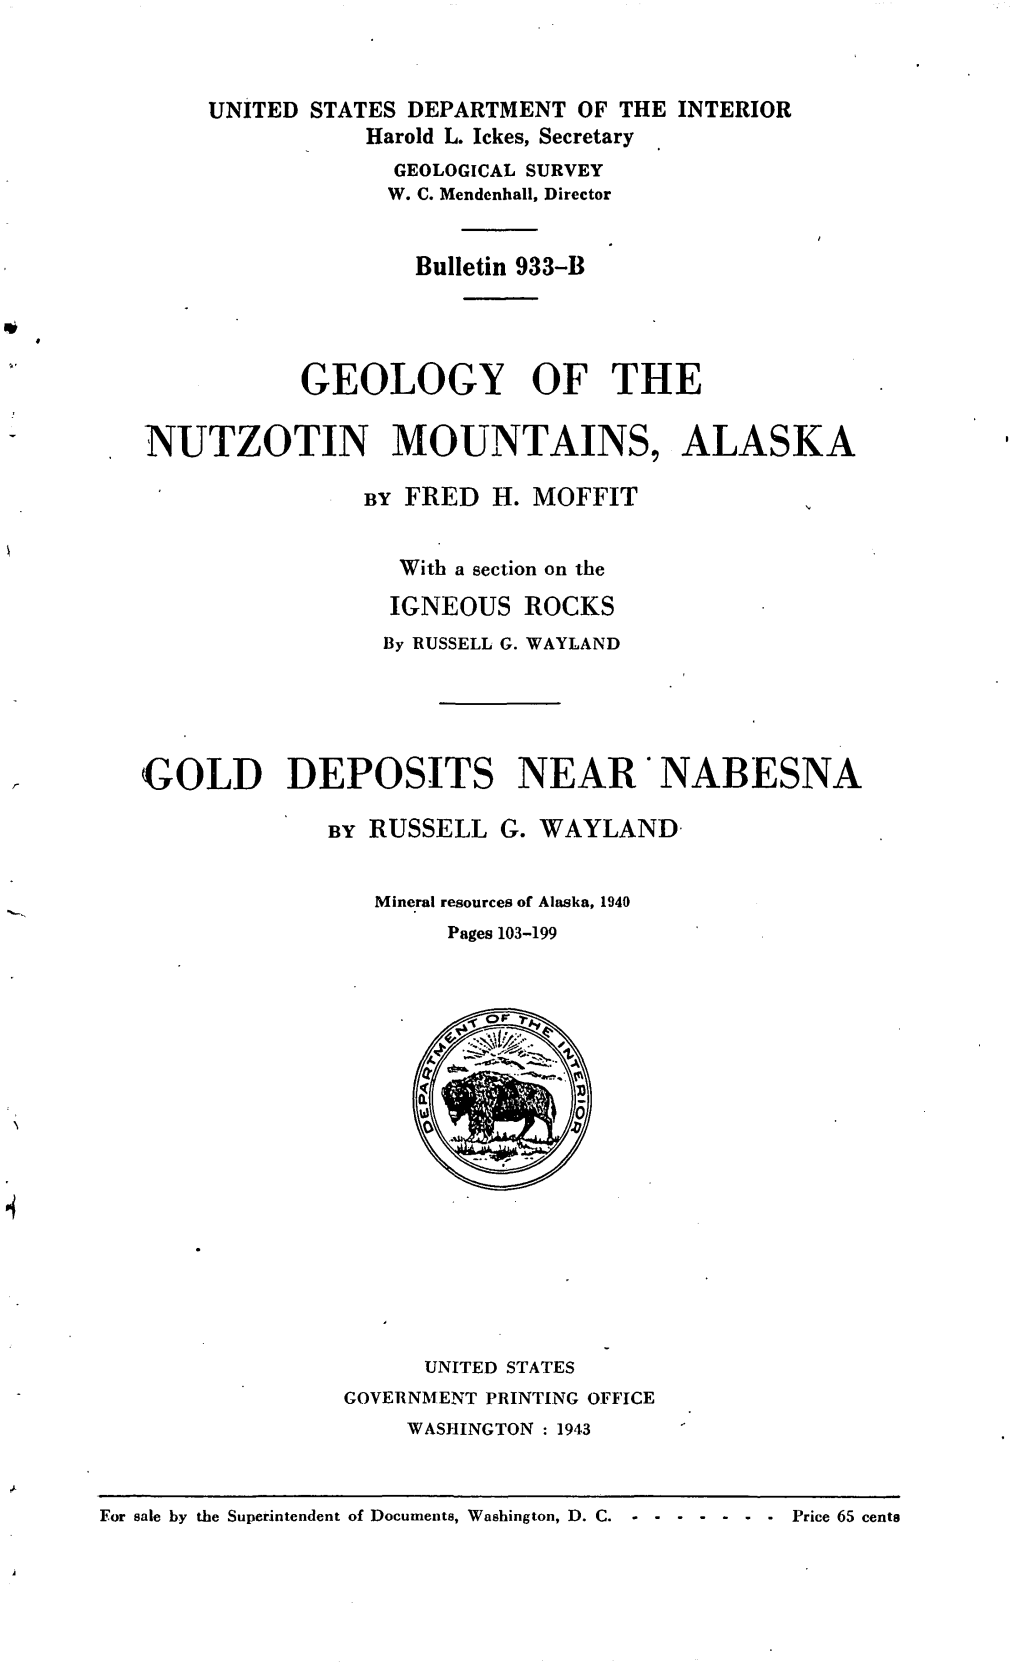 Geology of the Nutzotin Mountains, Alaska Gold Deposits Near Nabesna